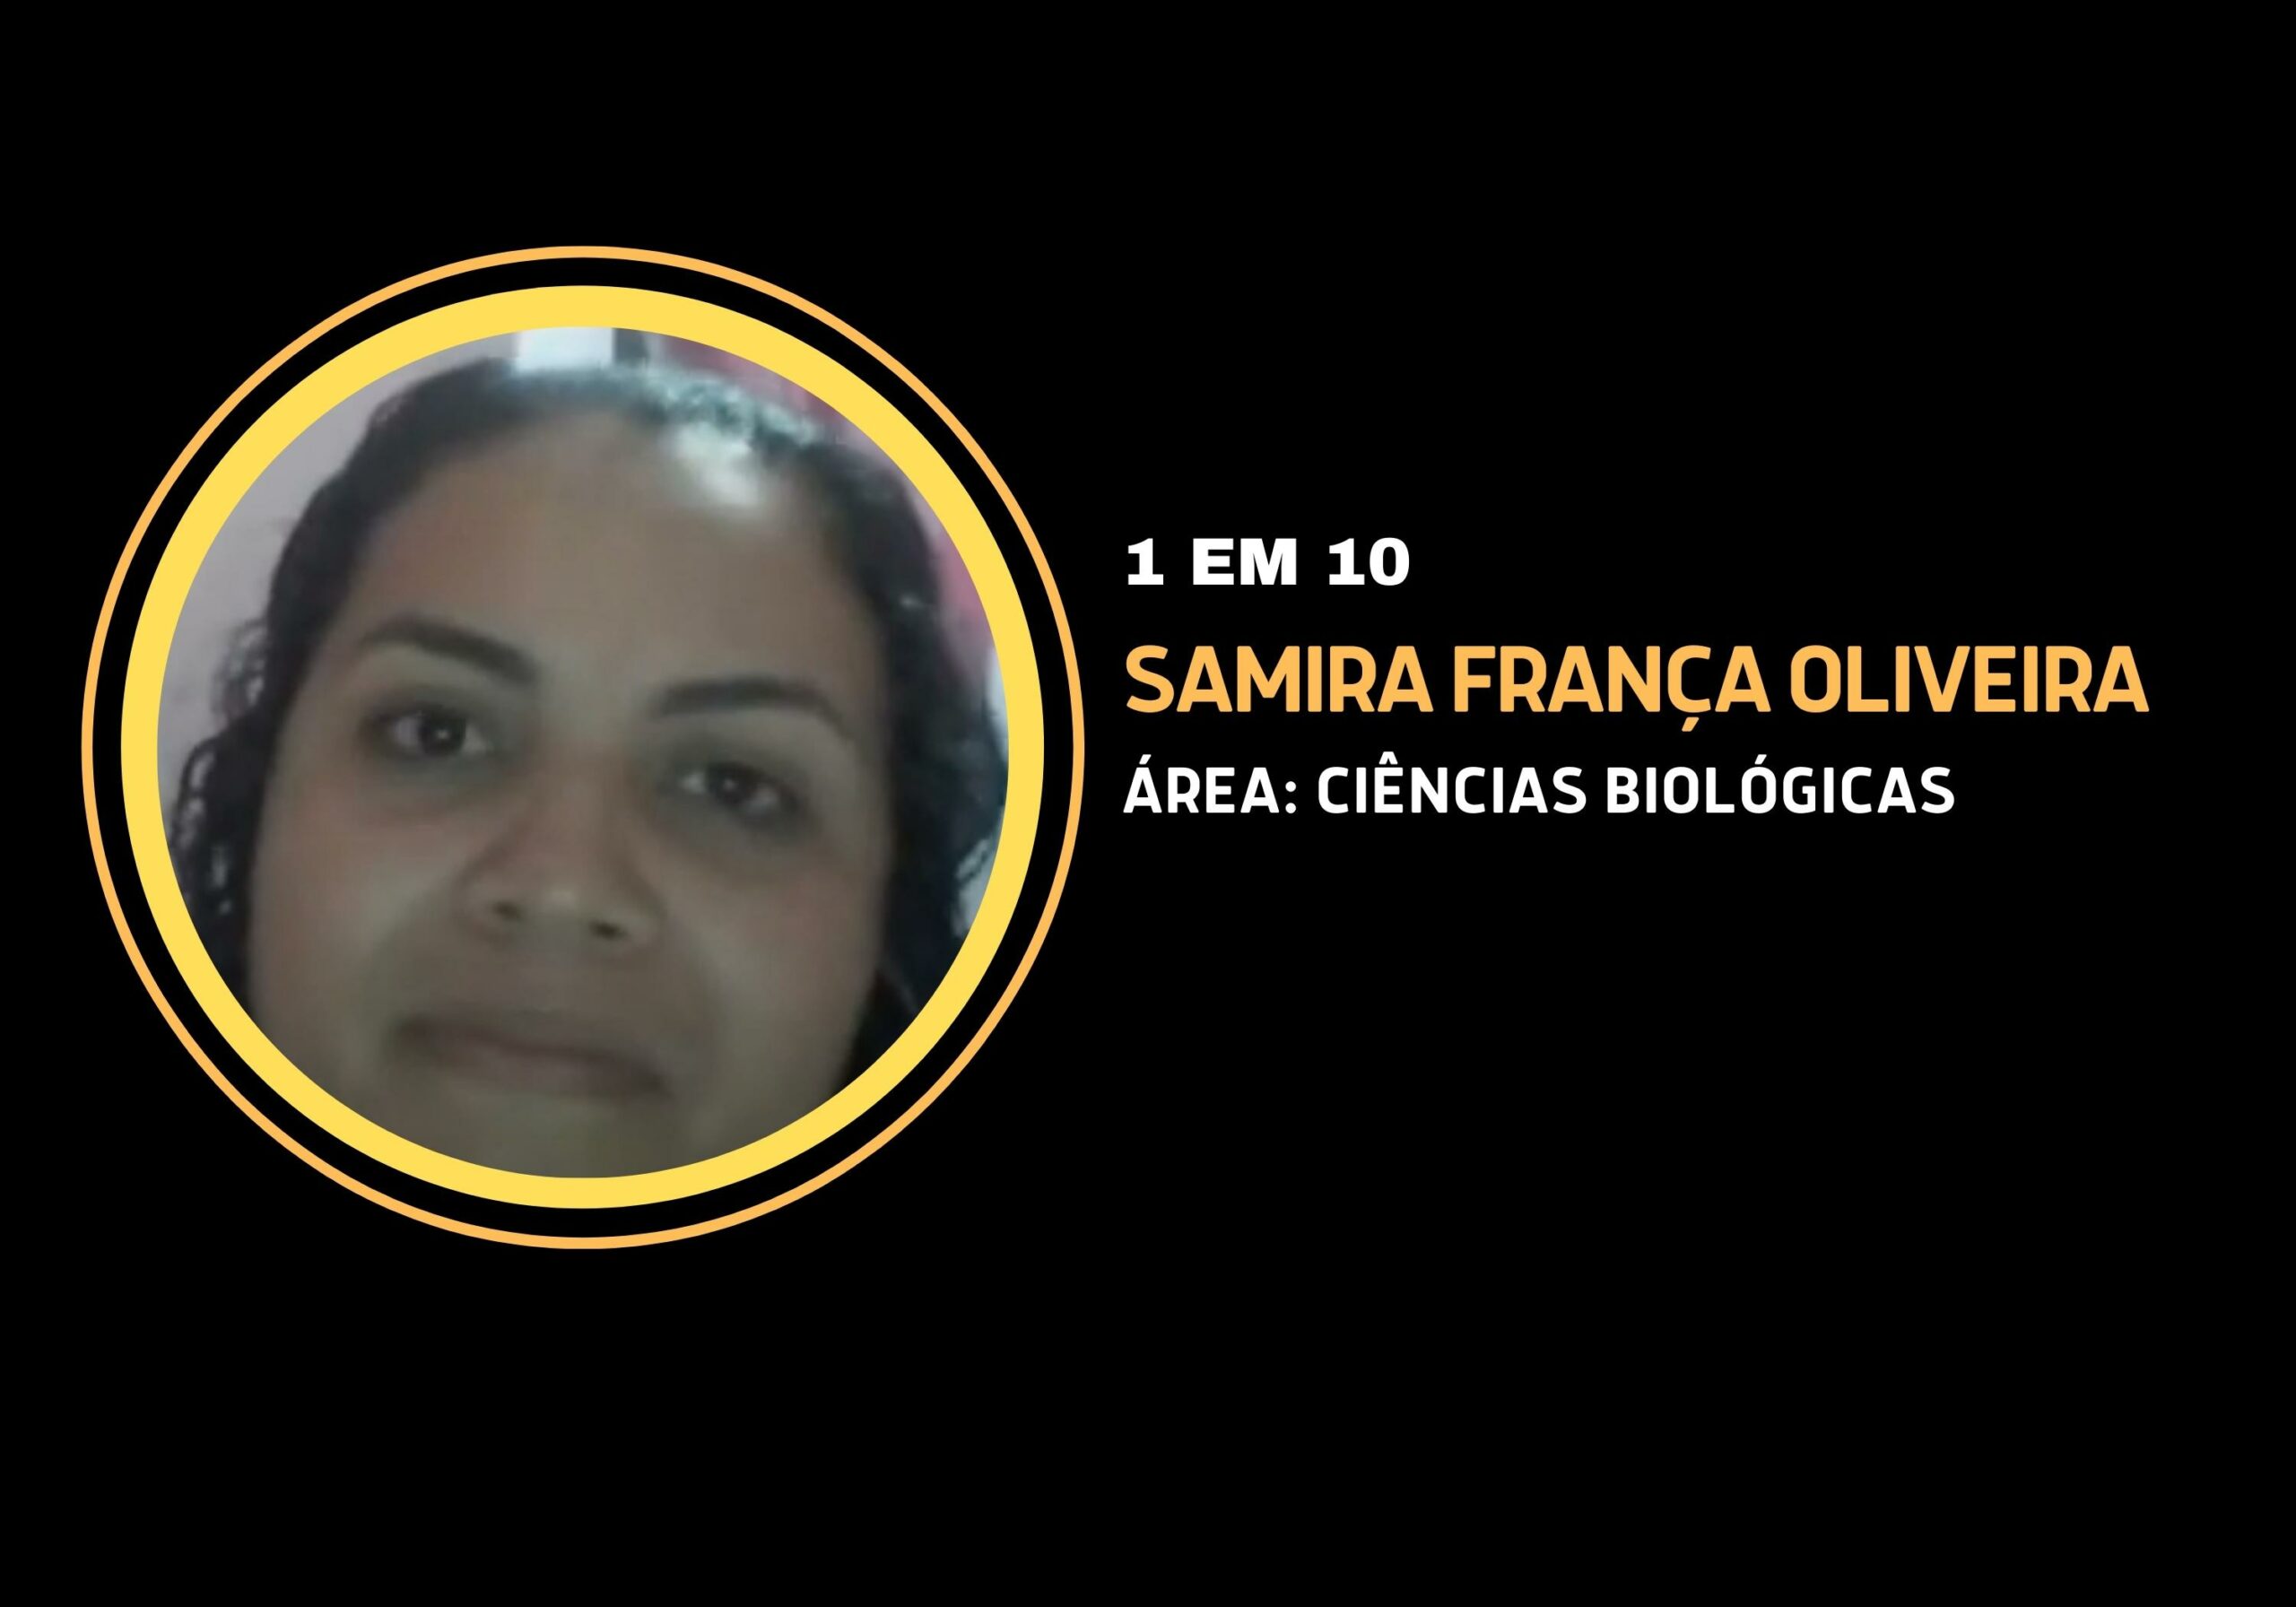 Samira França Oliveira | 1 em 10